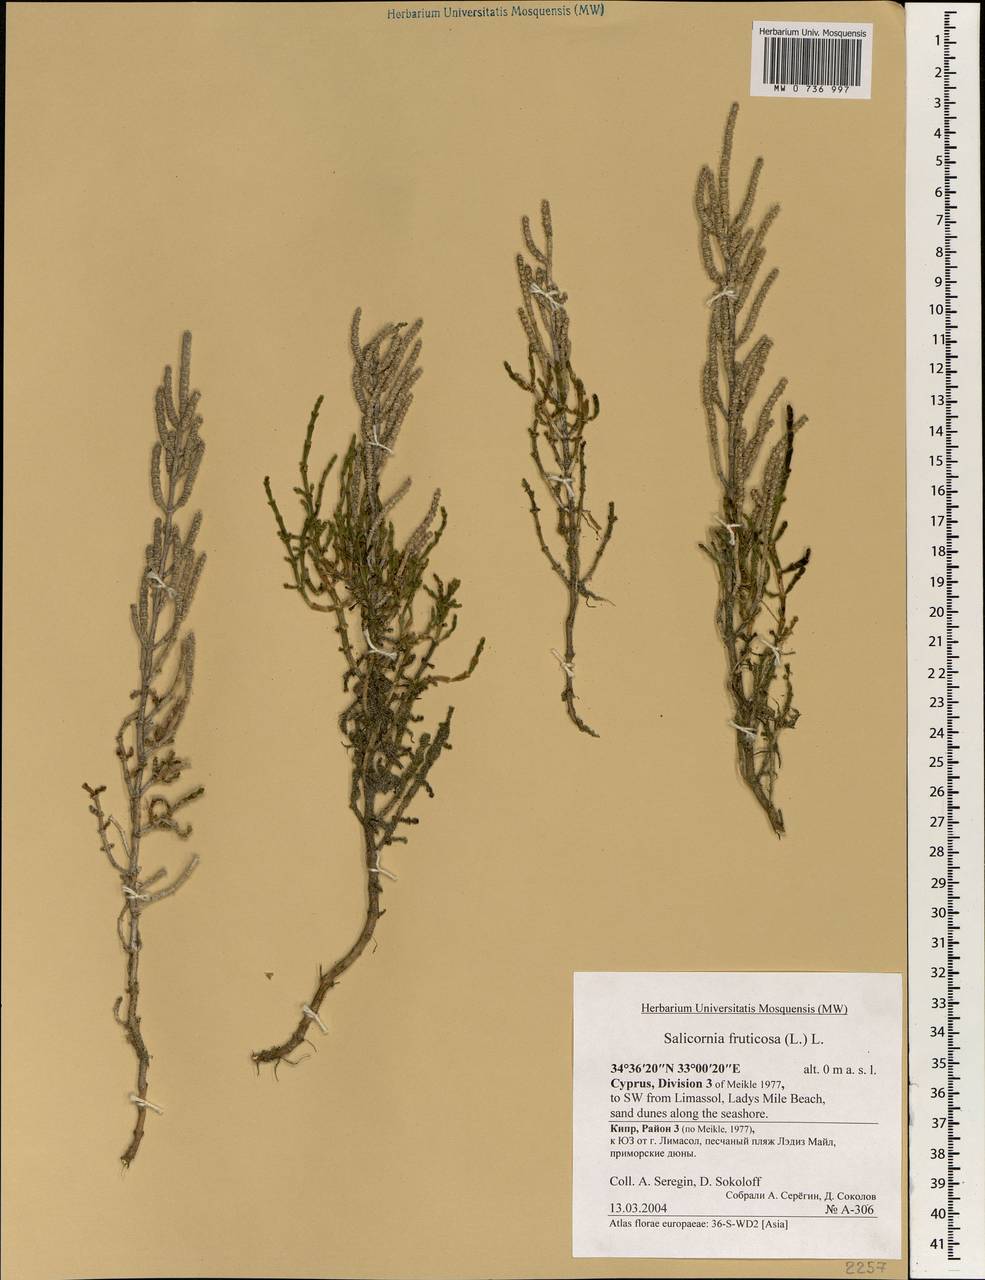 Sarcocornia fruticosa (L.) A. J. Scott, South Asia, South Asia (Asia outside ex-Soviet states and Mongolia) (ASIA) (Cyprus)